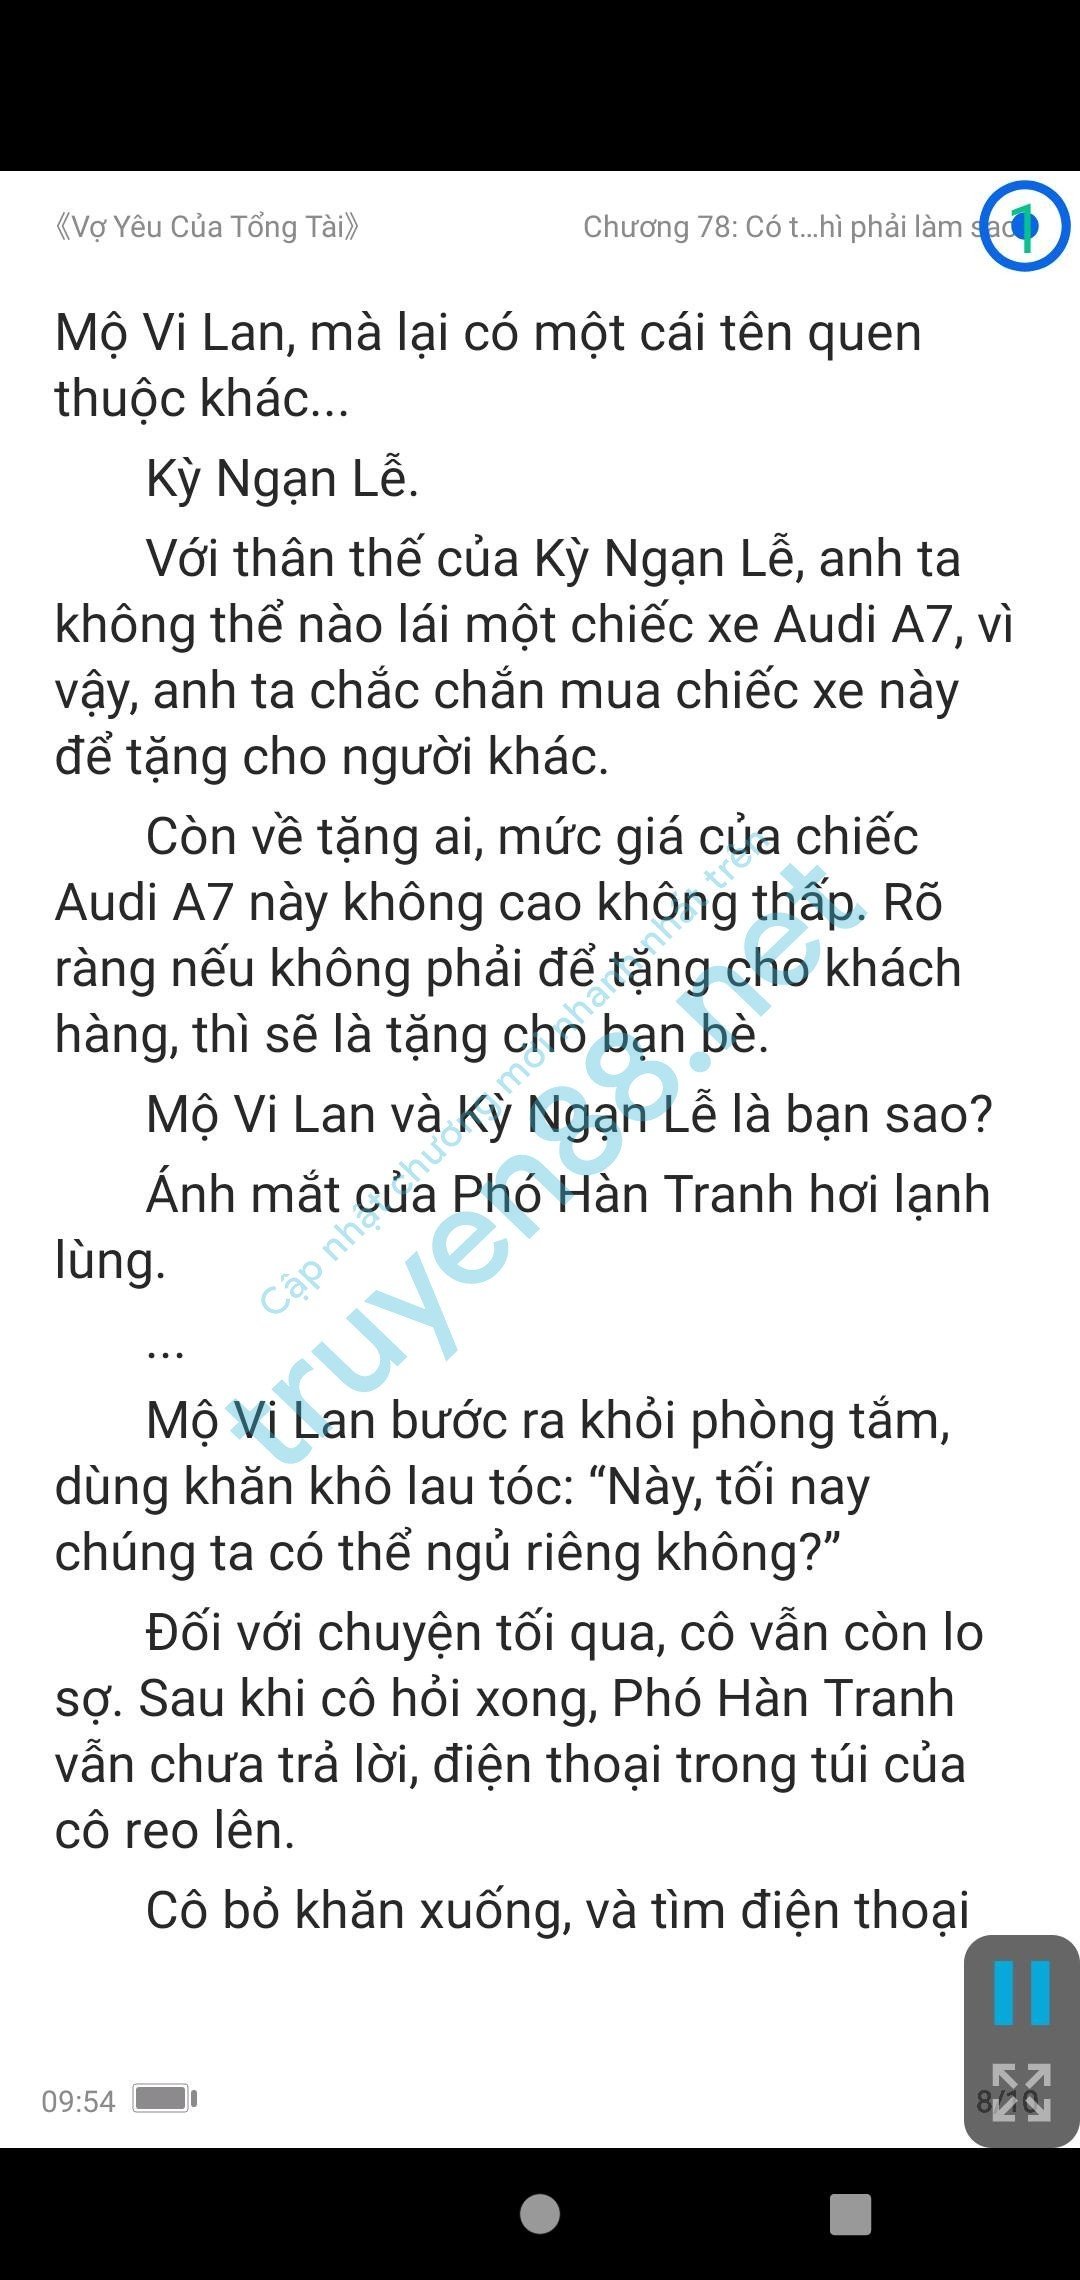 vo-yeu-cua-tong-tai-mo-vi-lan--pho-han-tranh-78-0